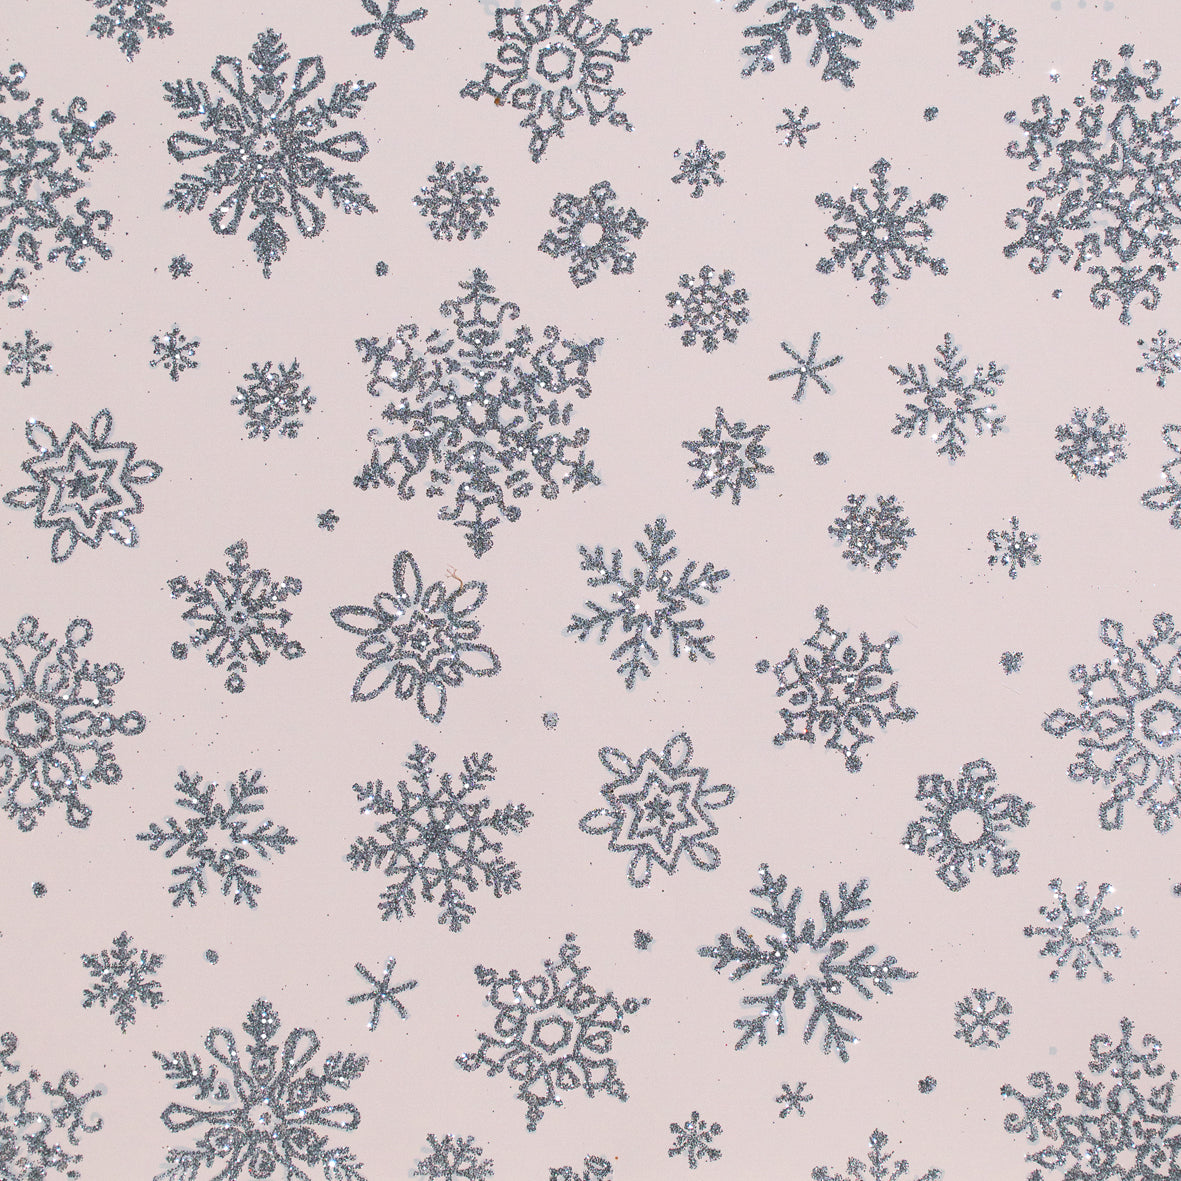 Winter Wonderland Delicate Snowflake Silver on Blush